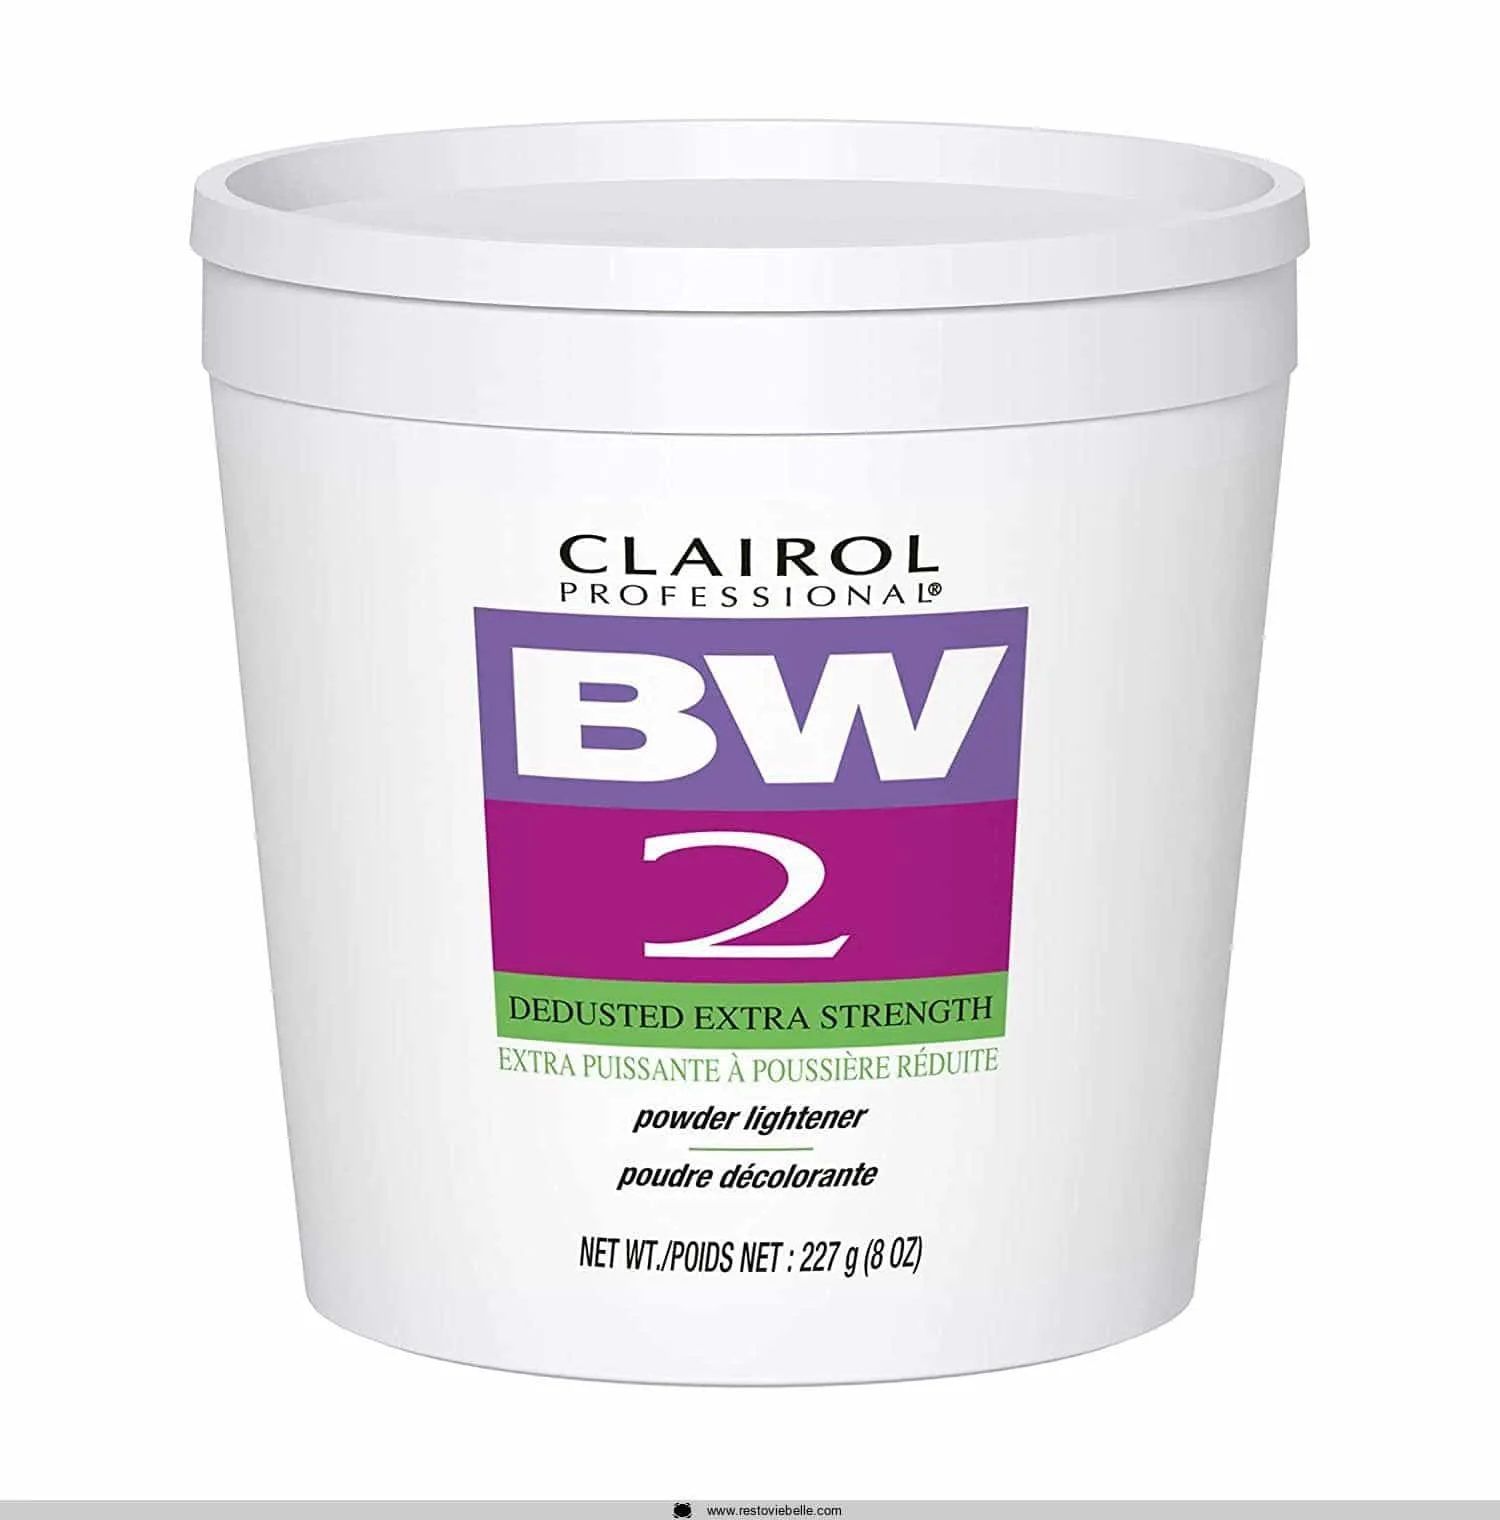 Clairol Professional Bw2 Lightener for